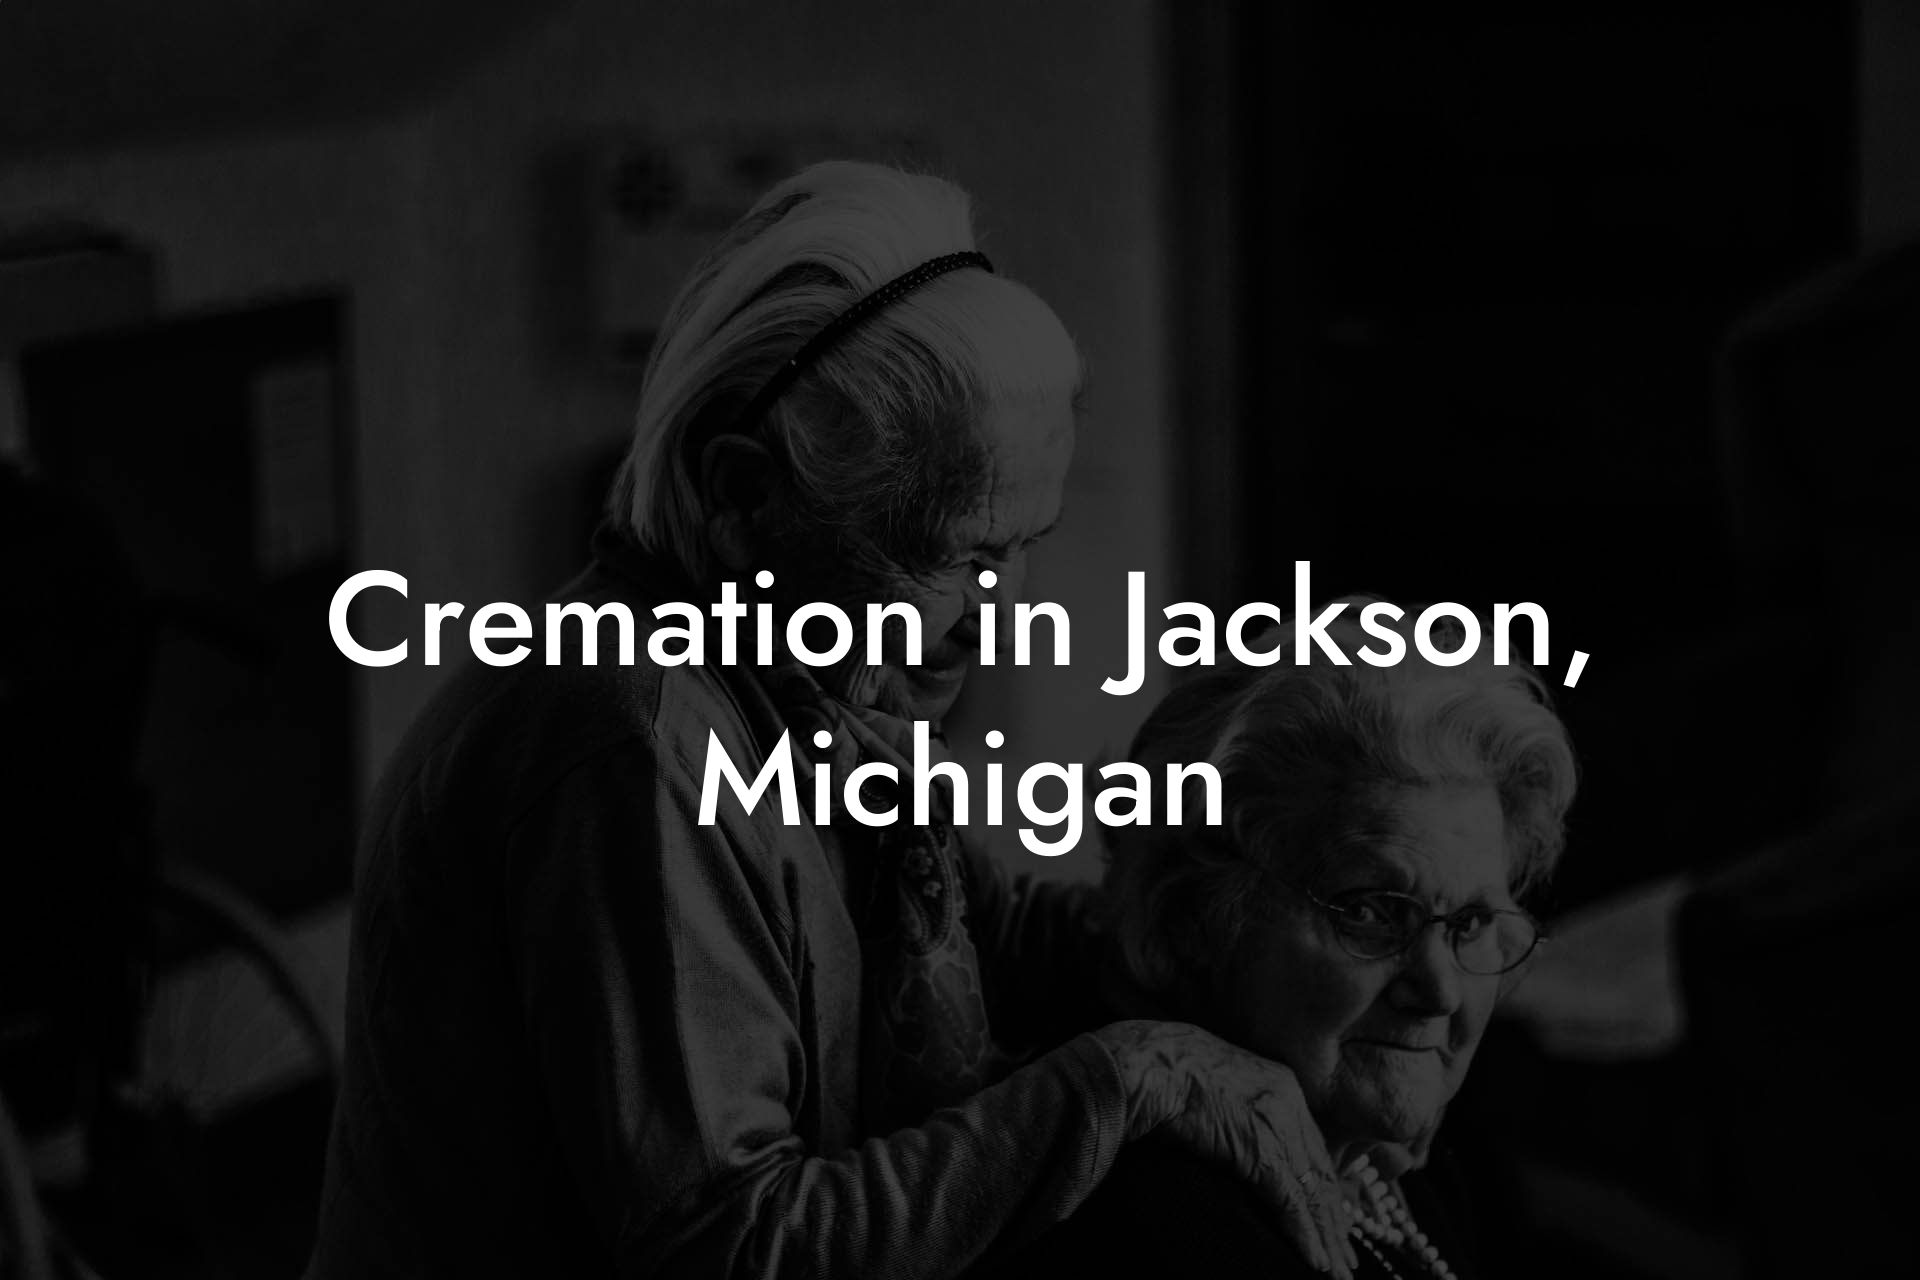 Cremation in Jackson, Michigan